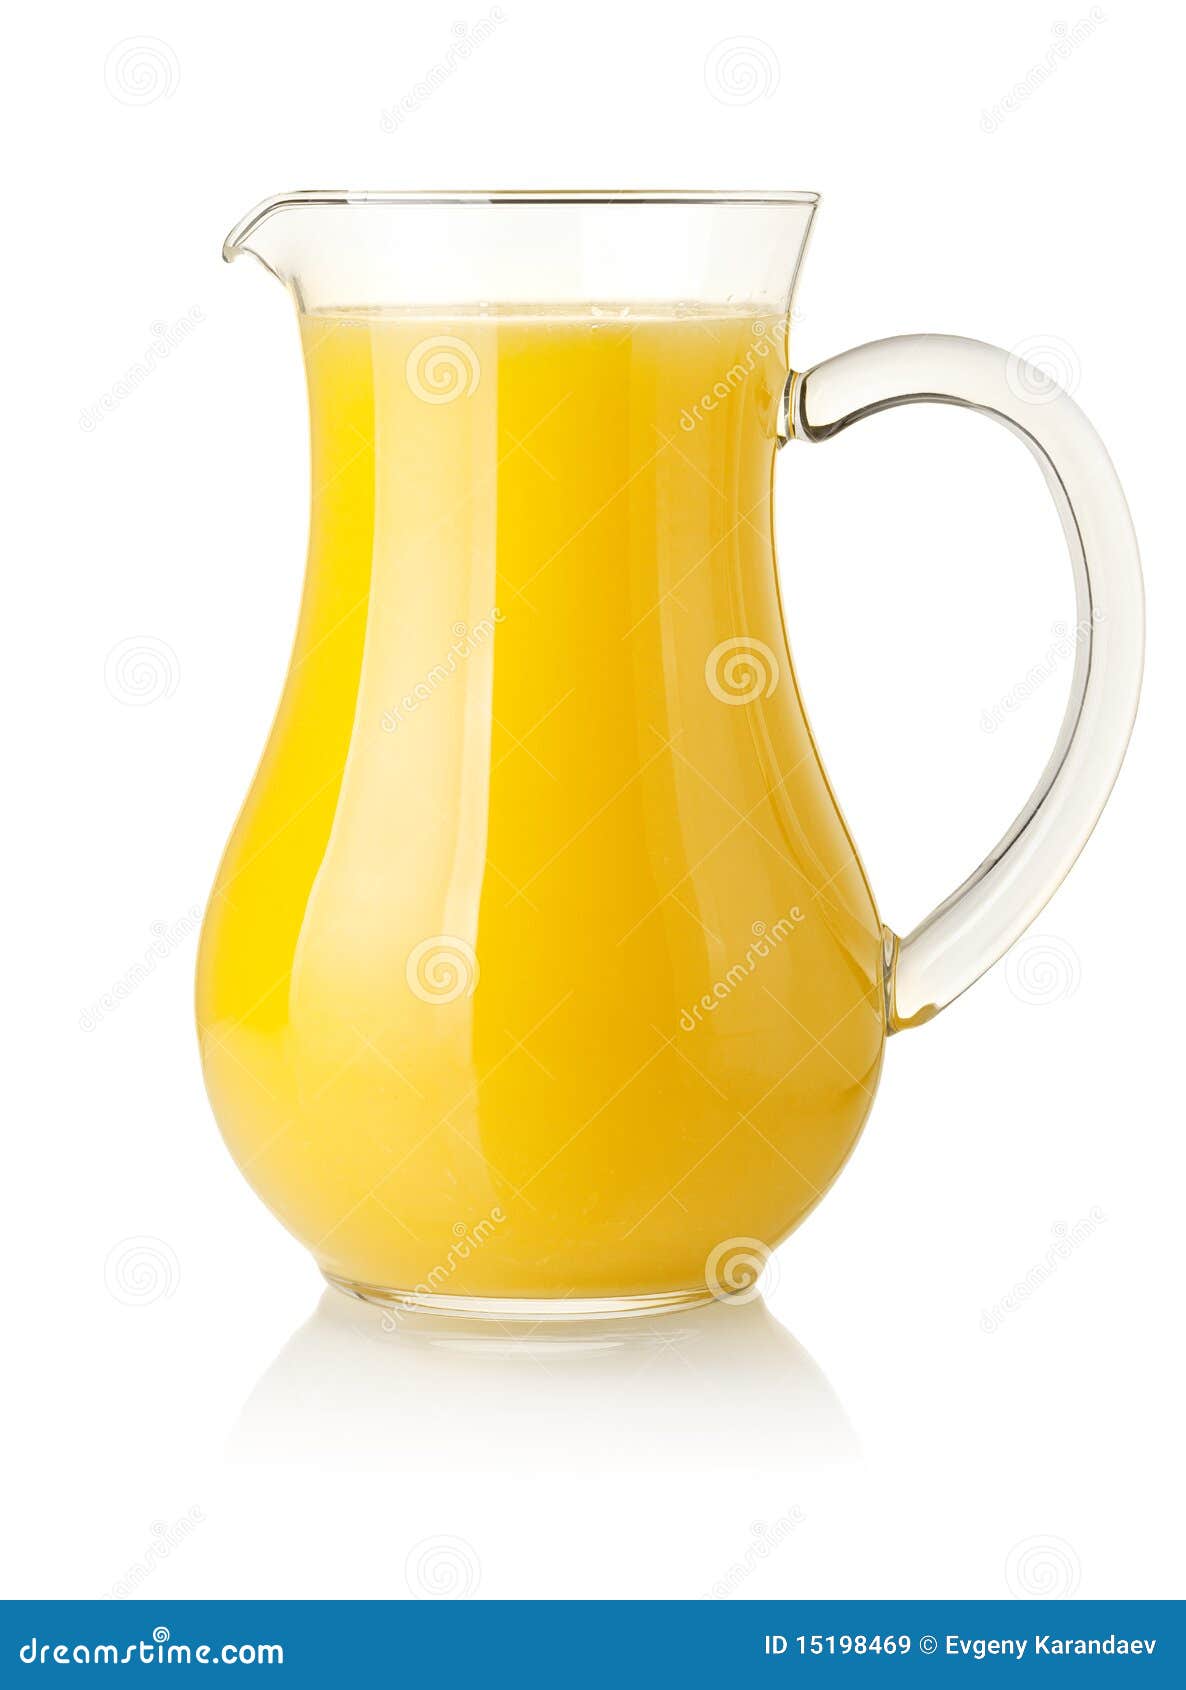 https://thumbs.dreamstime.com/z/orange-juice-pitcher-15198469.jpg